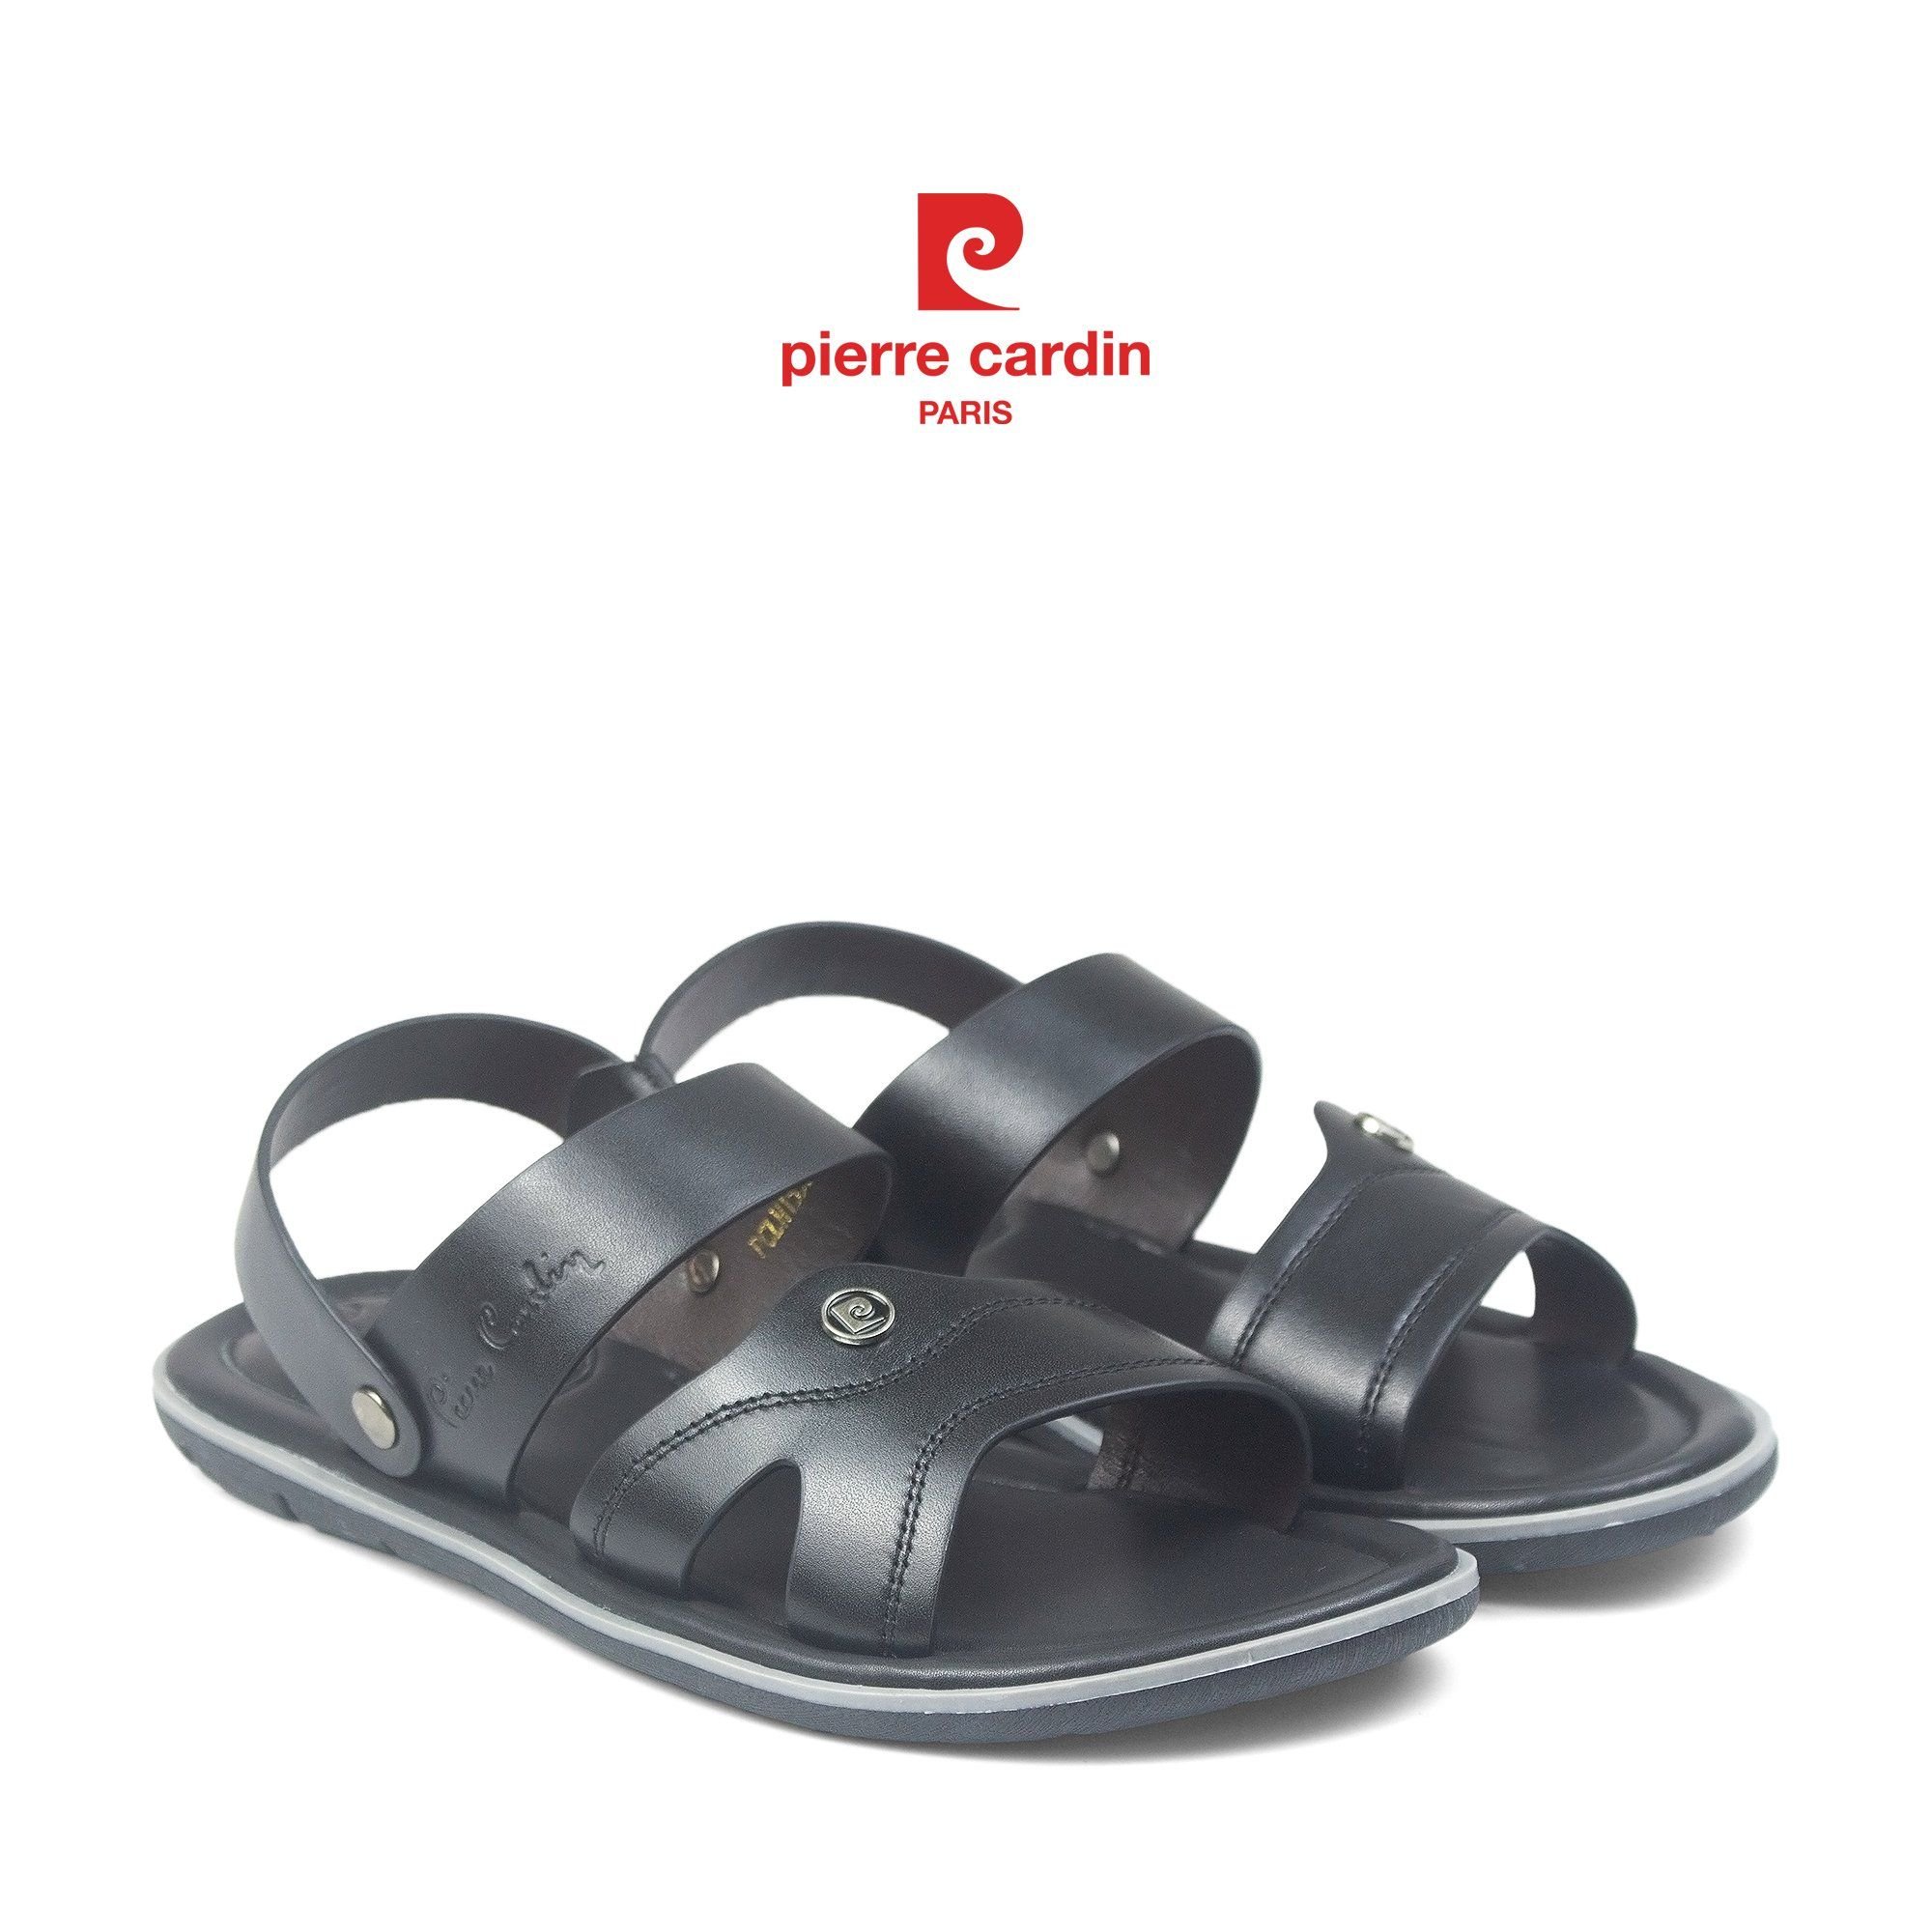 Pierre Cardin Paris Vietnam: Sandals Phiên Bản Cải Tiến Pierre Cardin - PCMFWLH 155 (BLACK)